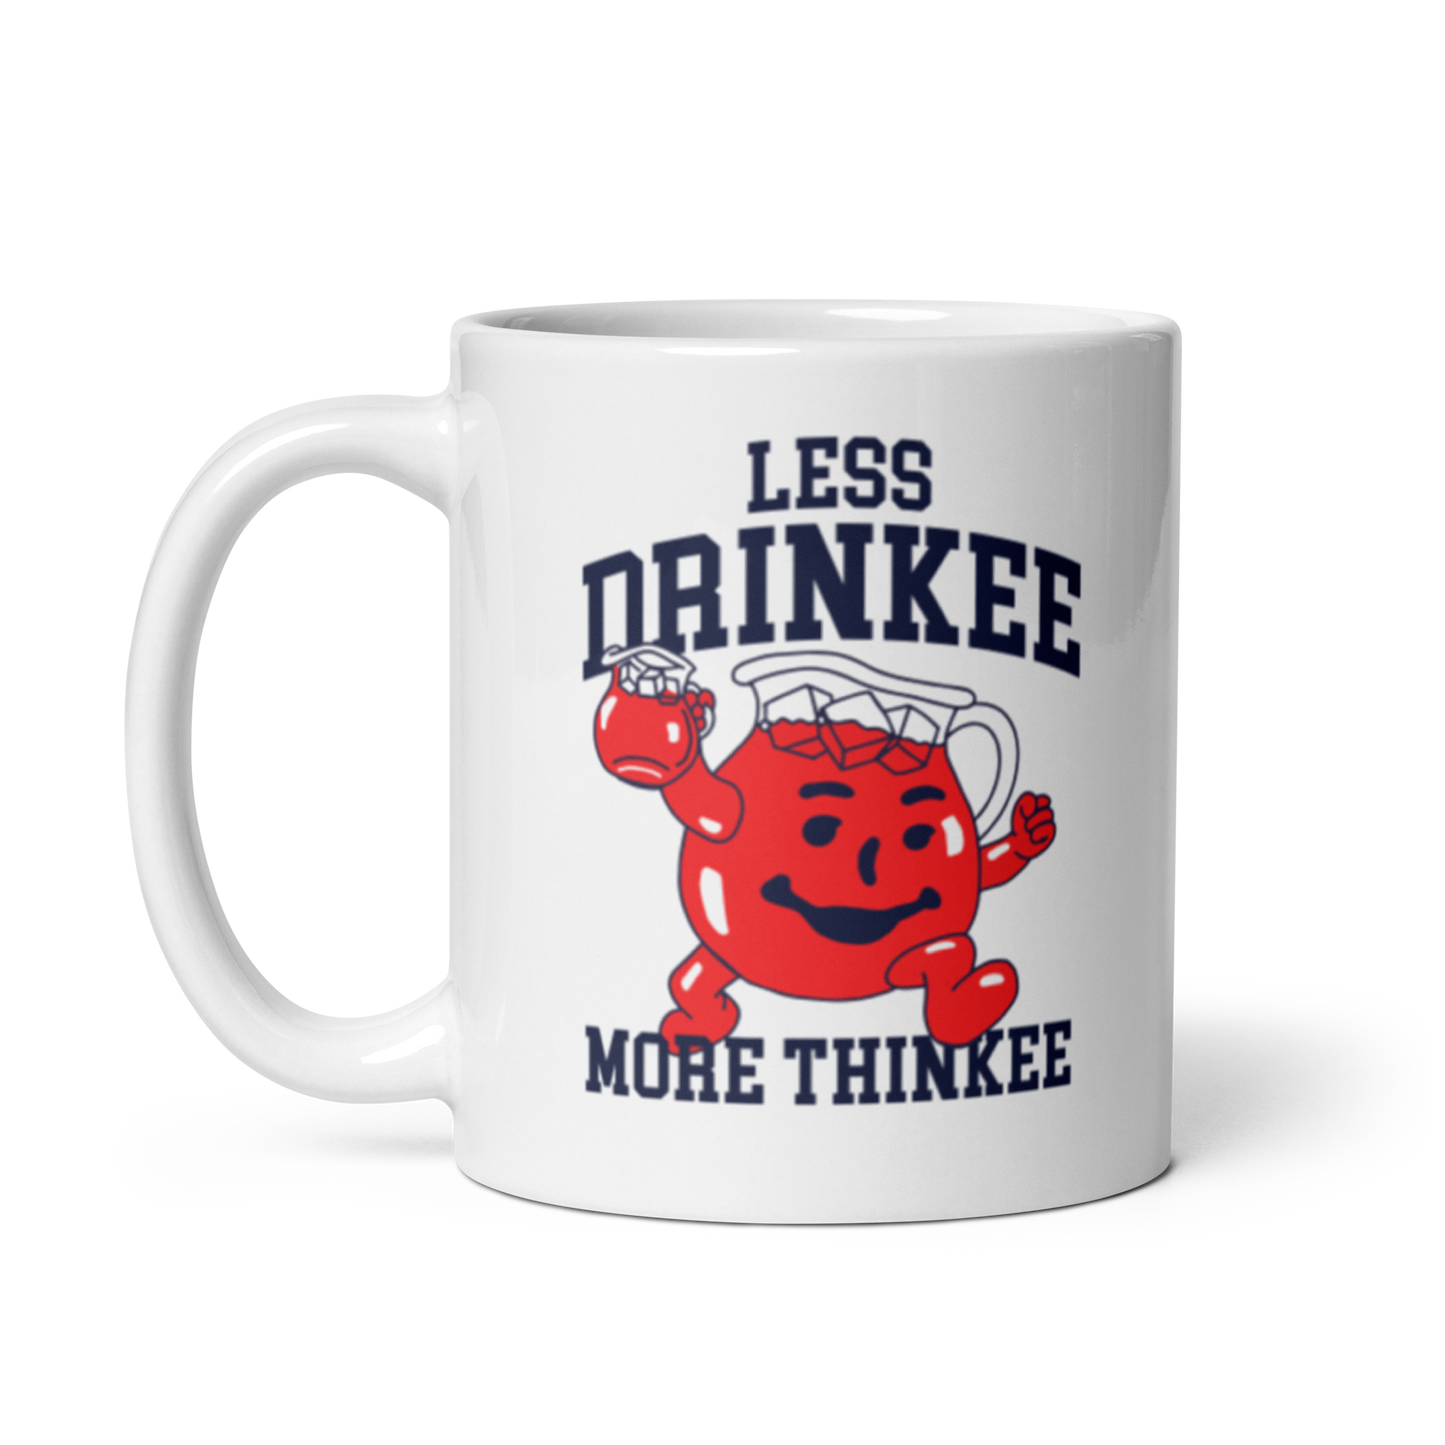 Less Drinkee More Thinkee Mug